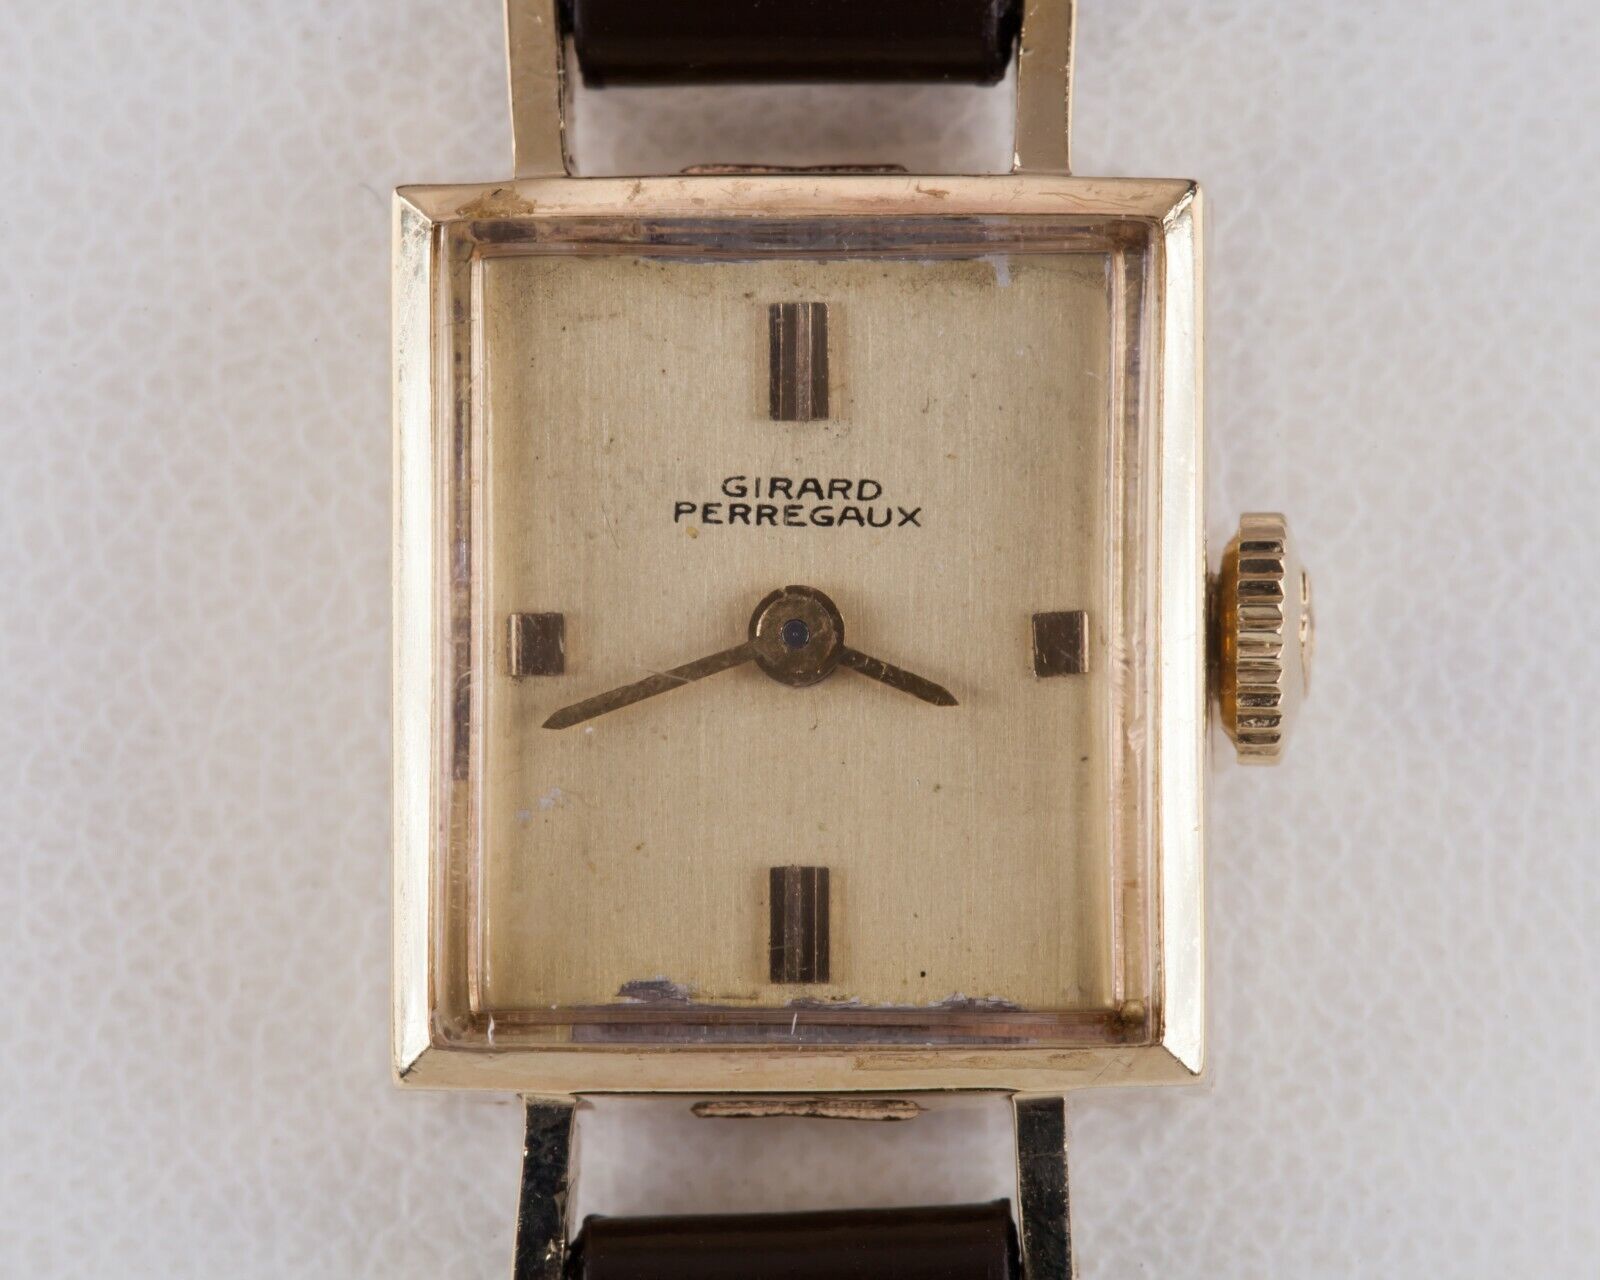 Girard-Perregaux 14k Yellow Gold Women's Hand-Winding Watch w/ Leather Band - $915.74